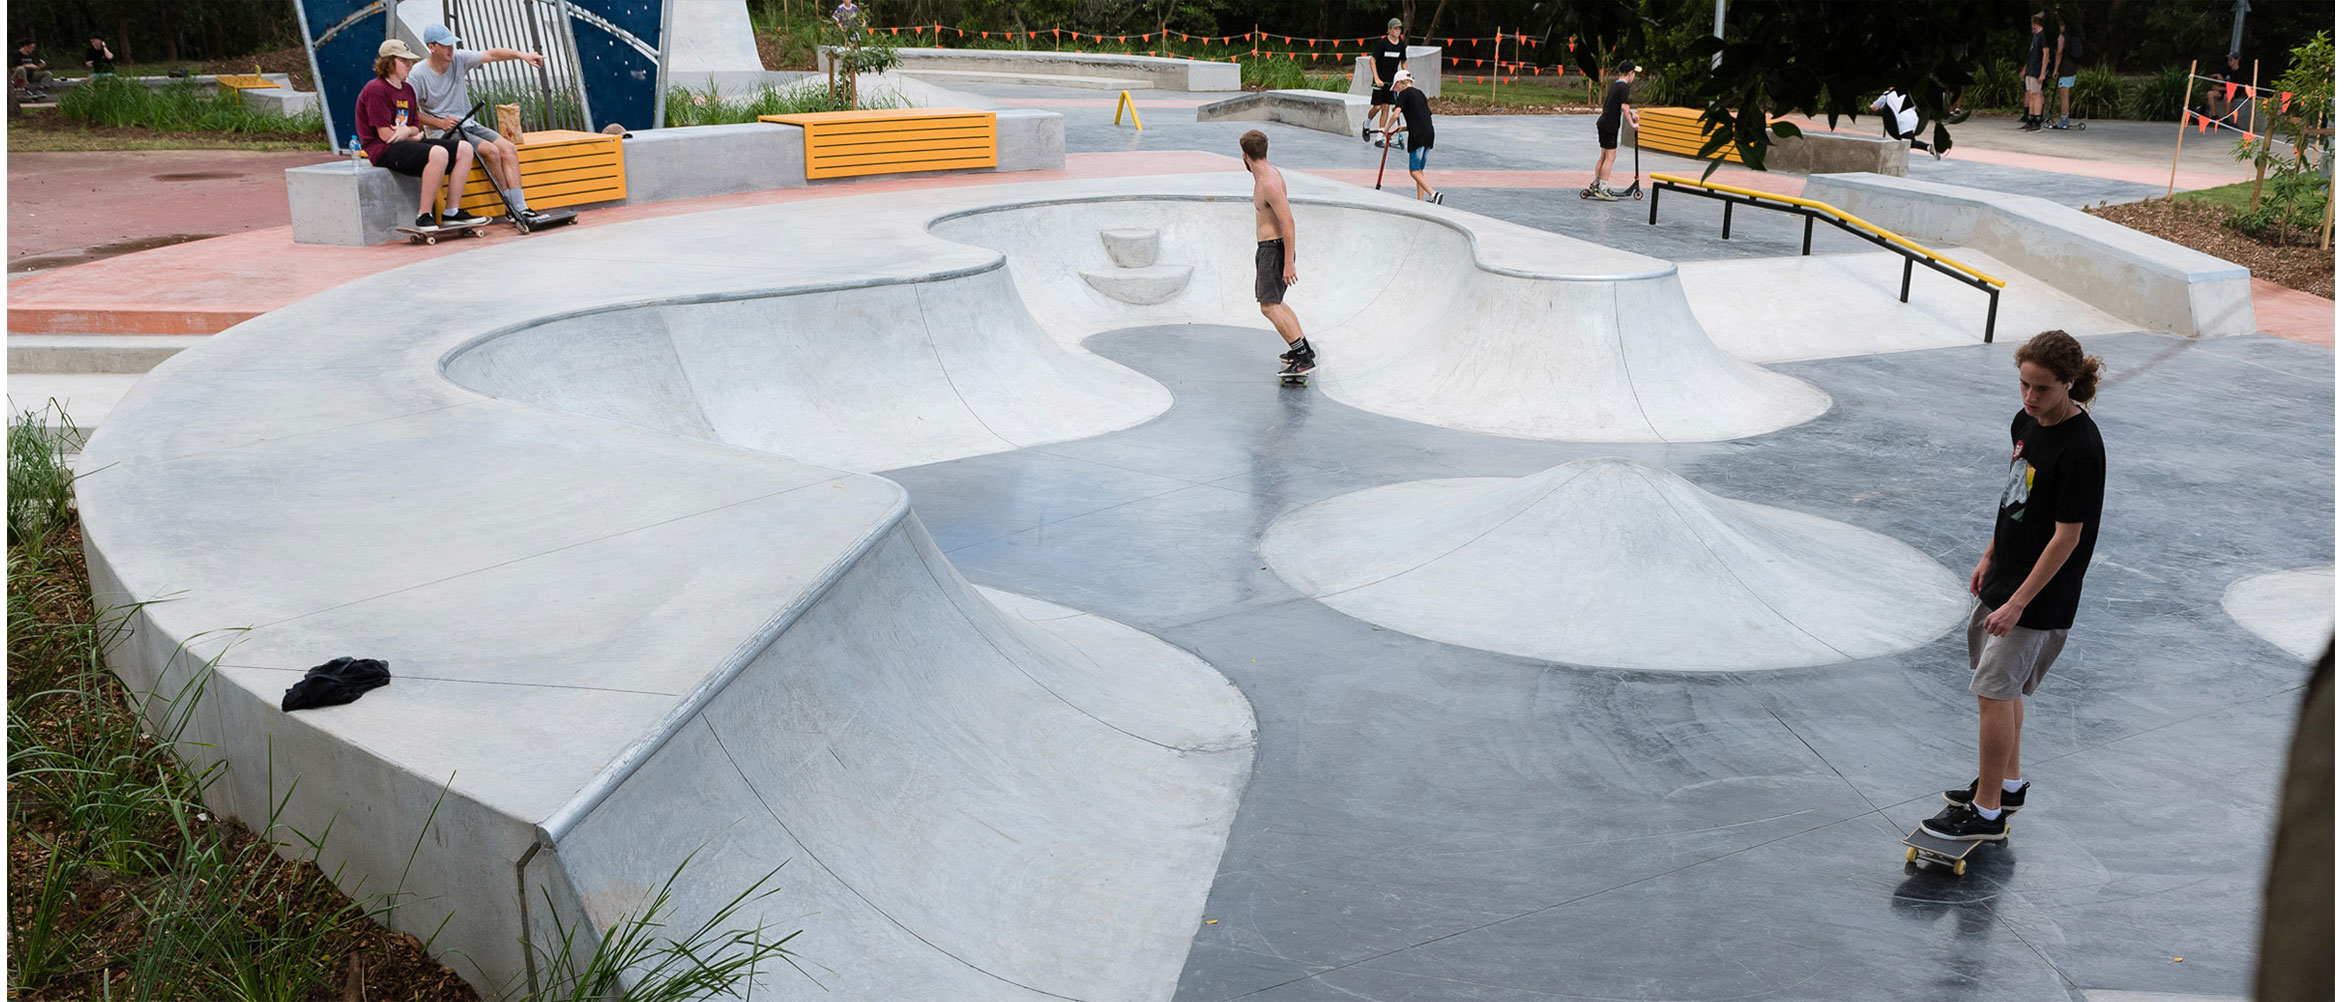 Narangba skate park tight bowl